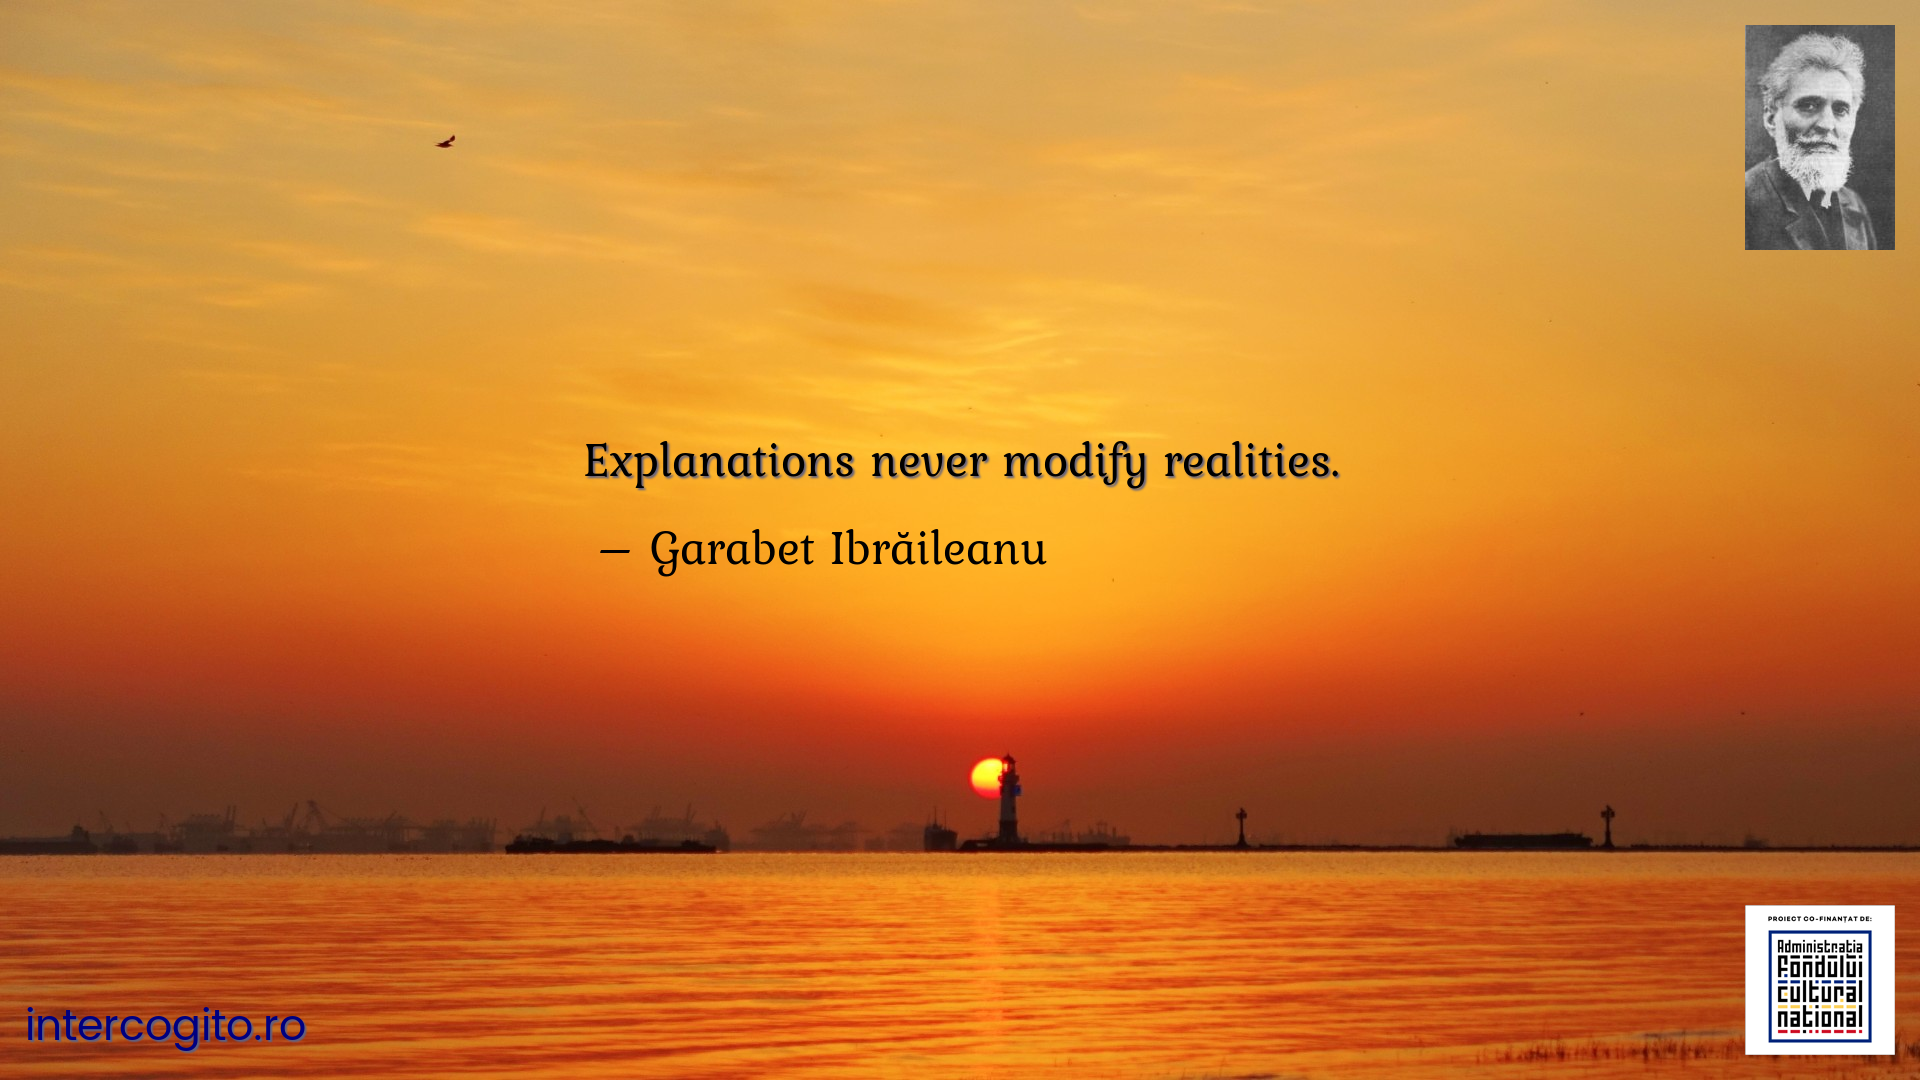 Explanations never modify realities.